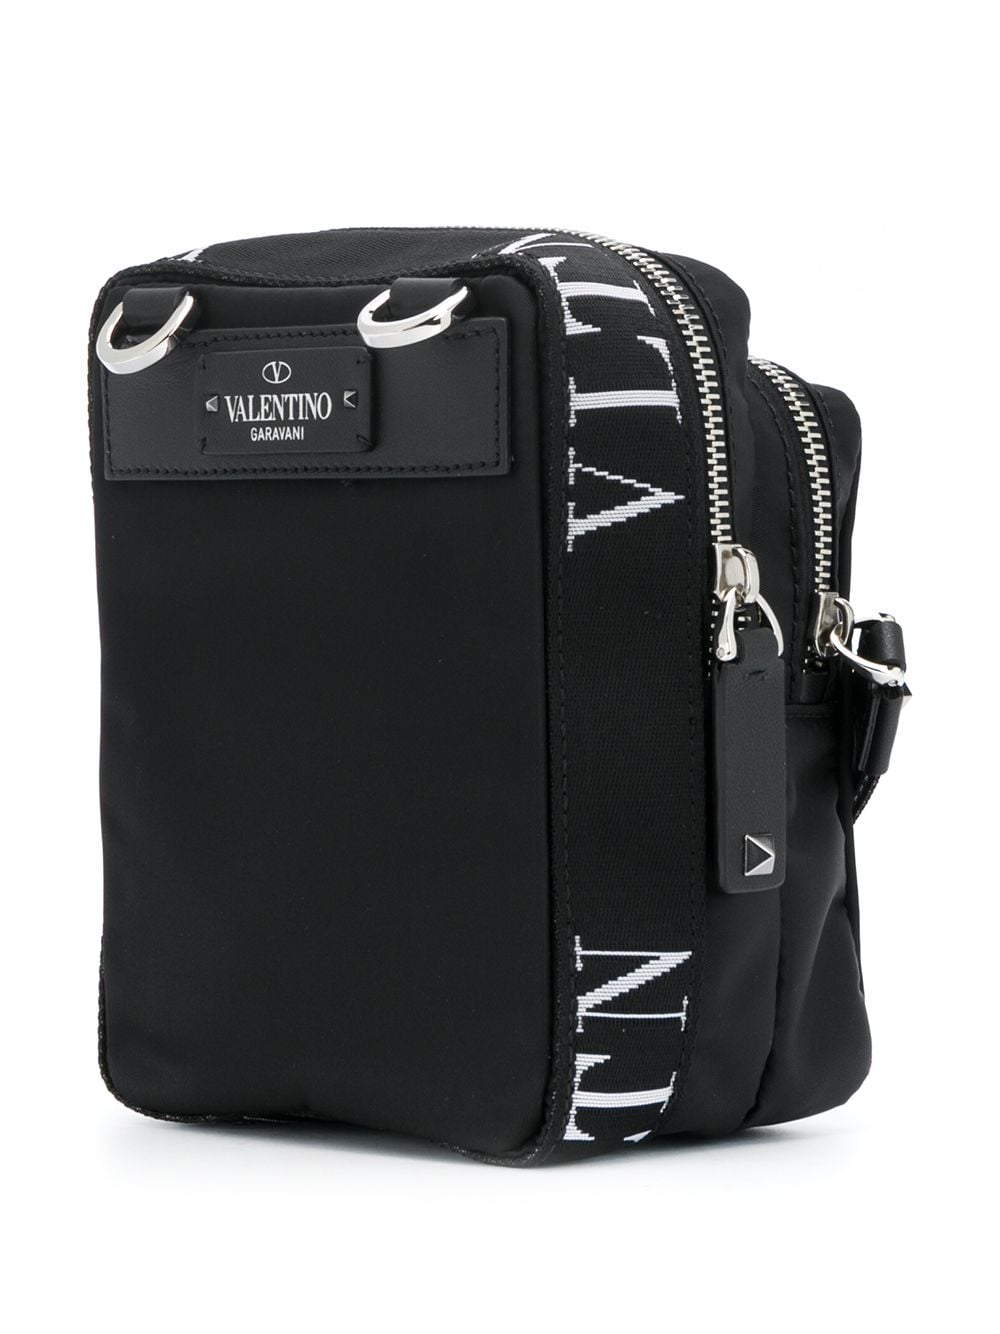 фото Valentino garavani сумка-мессенджер с логотипом vltn